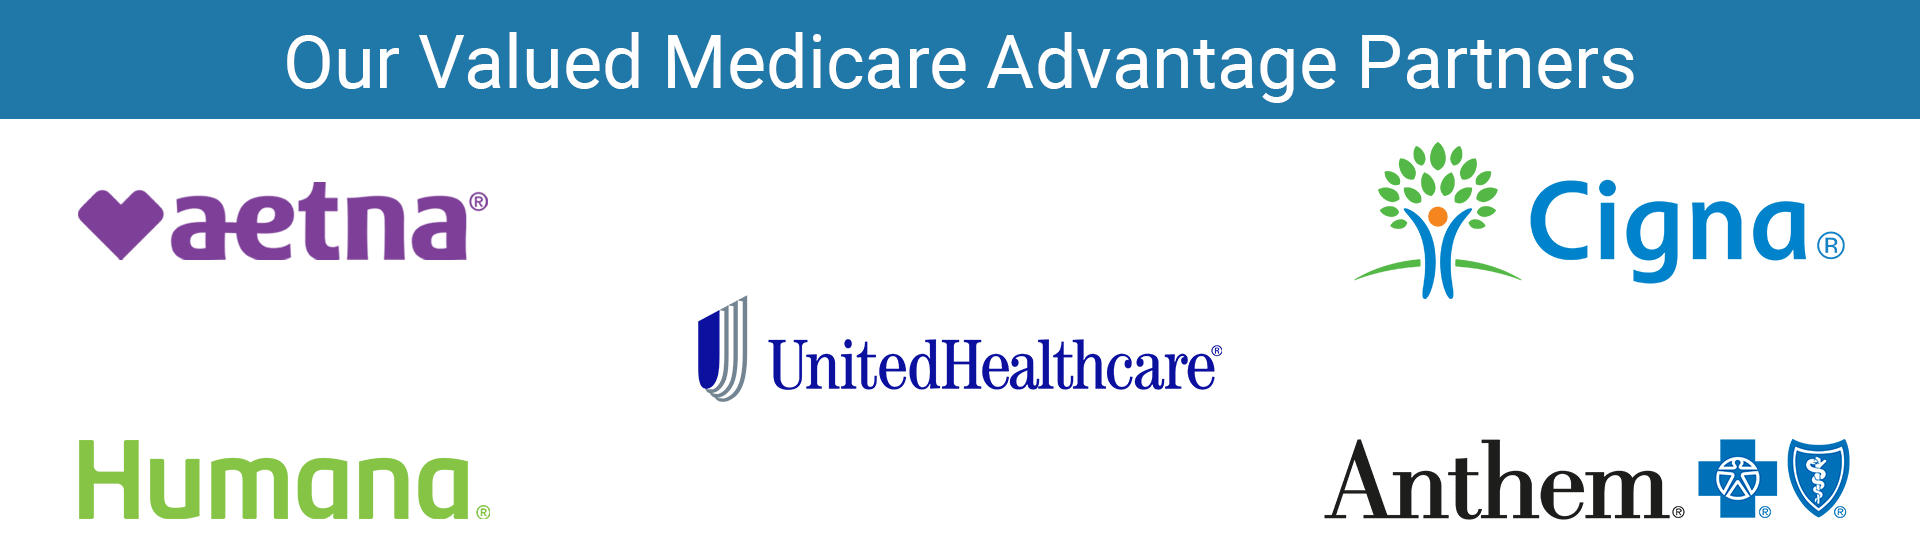 Our Valued Medicare Advantage Partner Logos:  Aetna, Cigna, Humana, Anthem, UnitedHealthcare